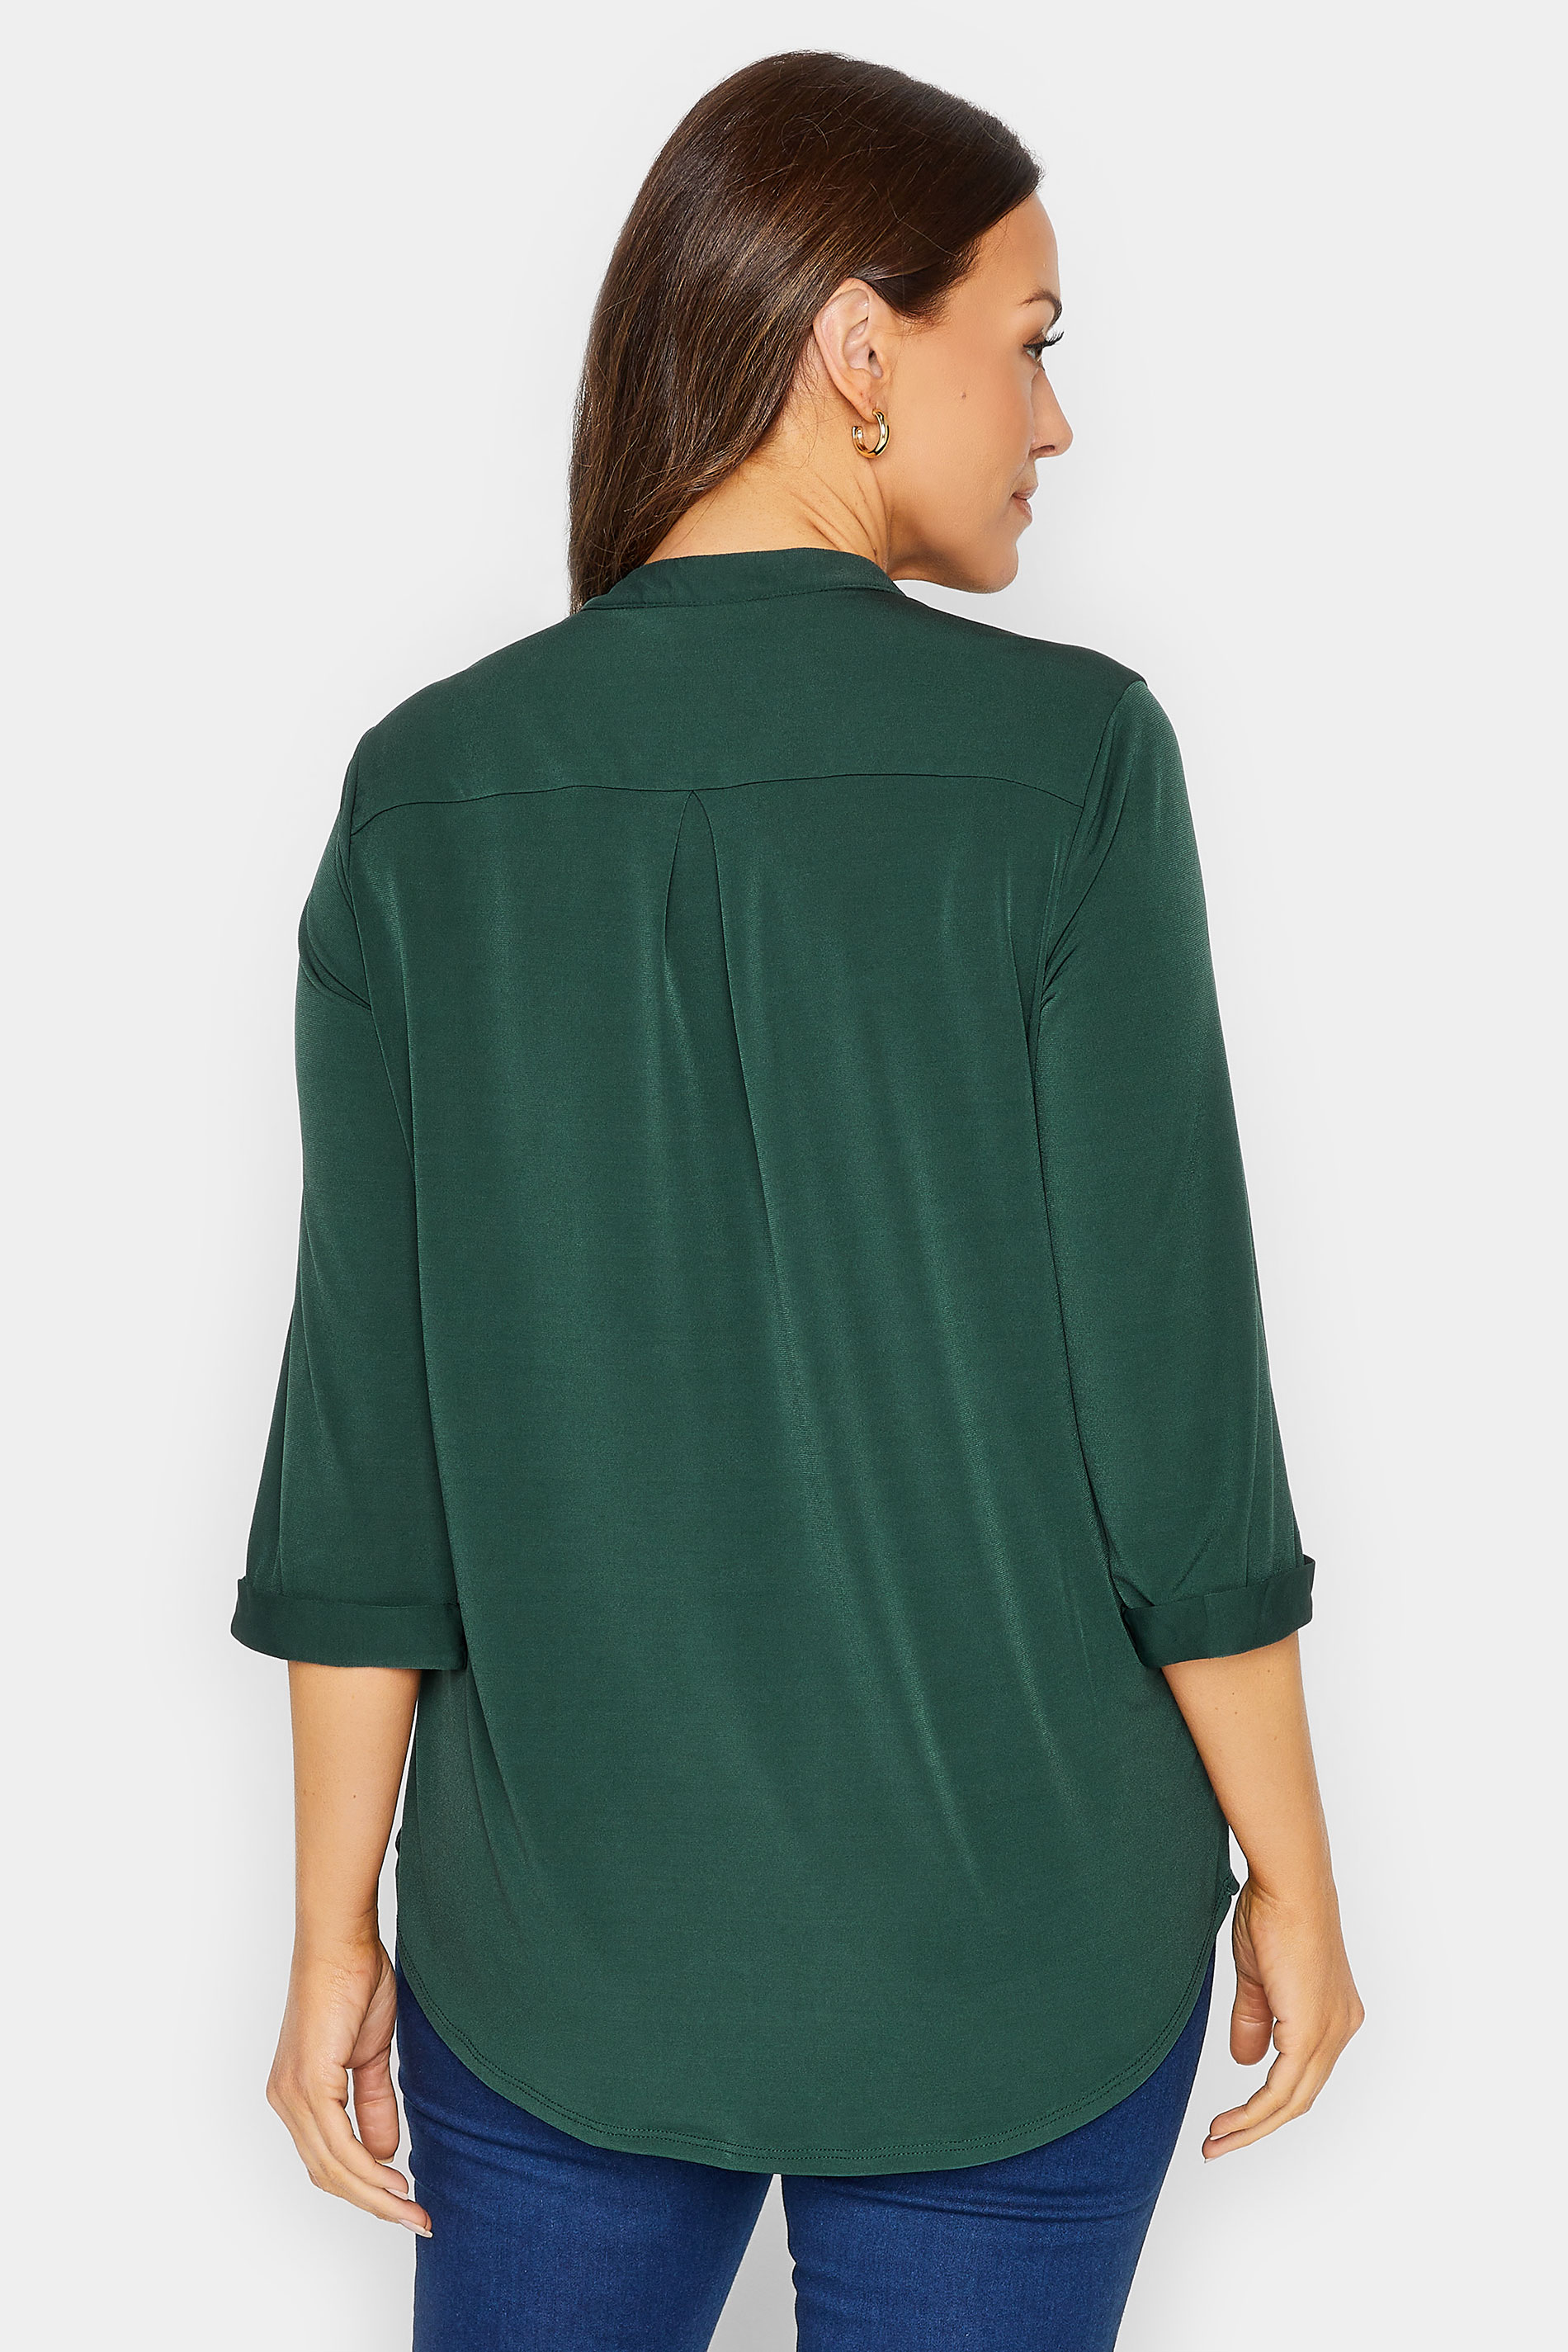 M&Co Green Half Placket Jersey Shirt | M&Co 3